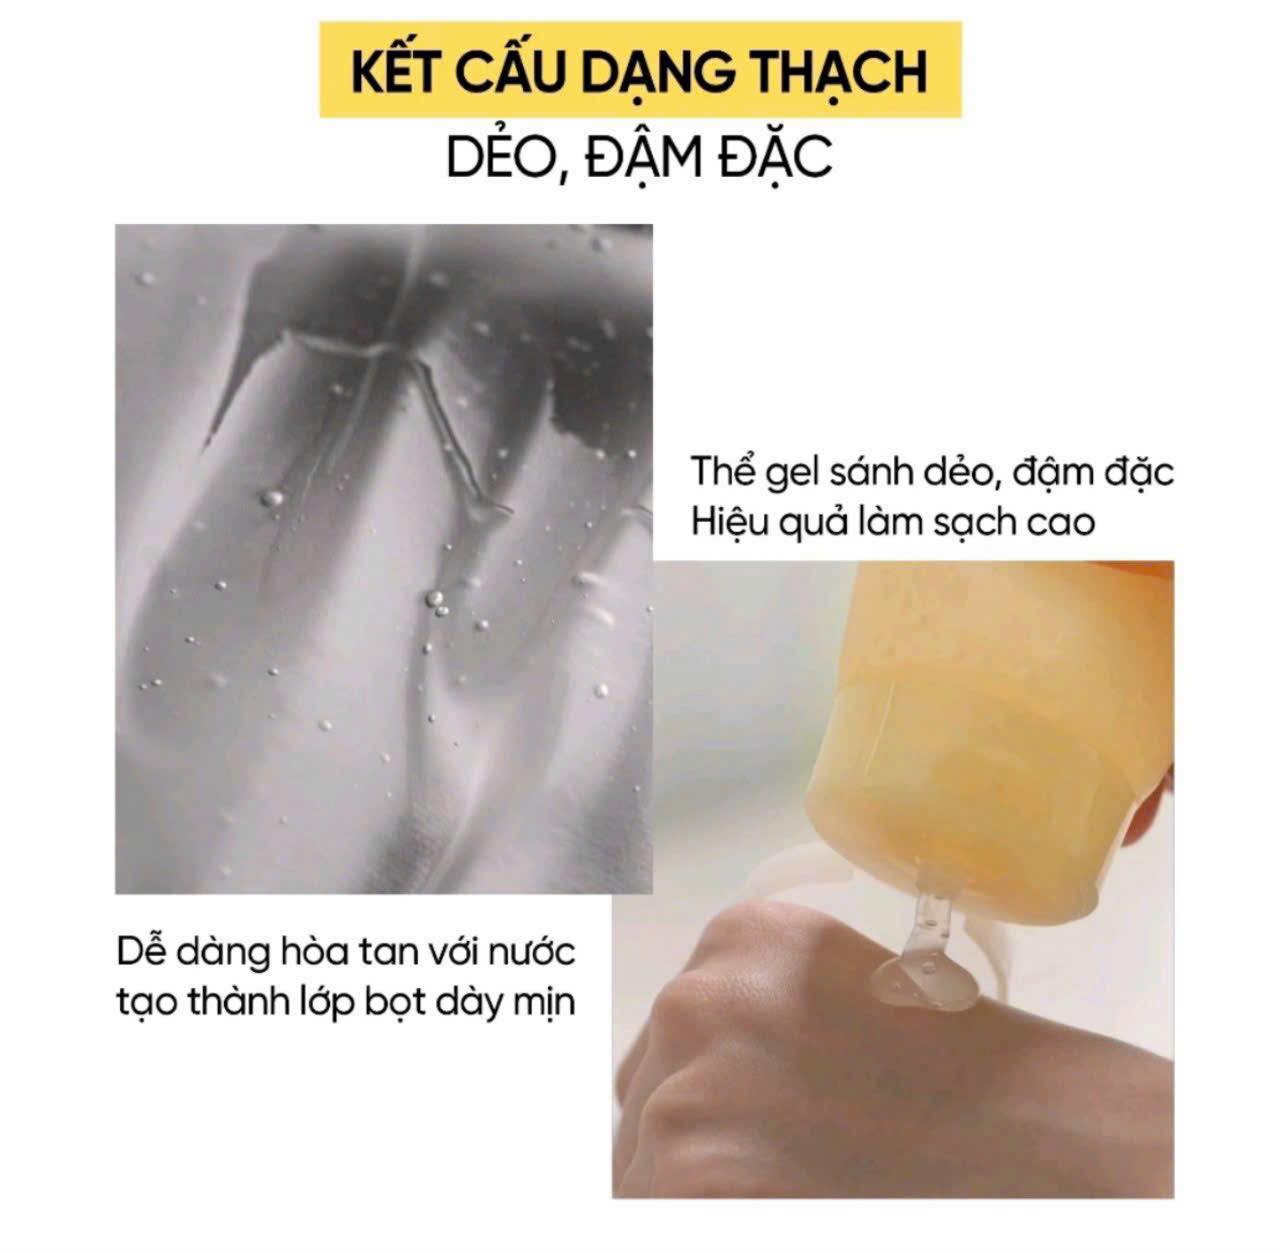 Sữa Rửa Mặt Thạch Dưỡng Trắng Ngừa Lão Hoá OHUI Oven Miracle Toning Jelly Cleanser 